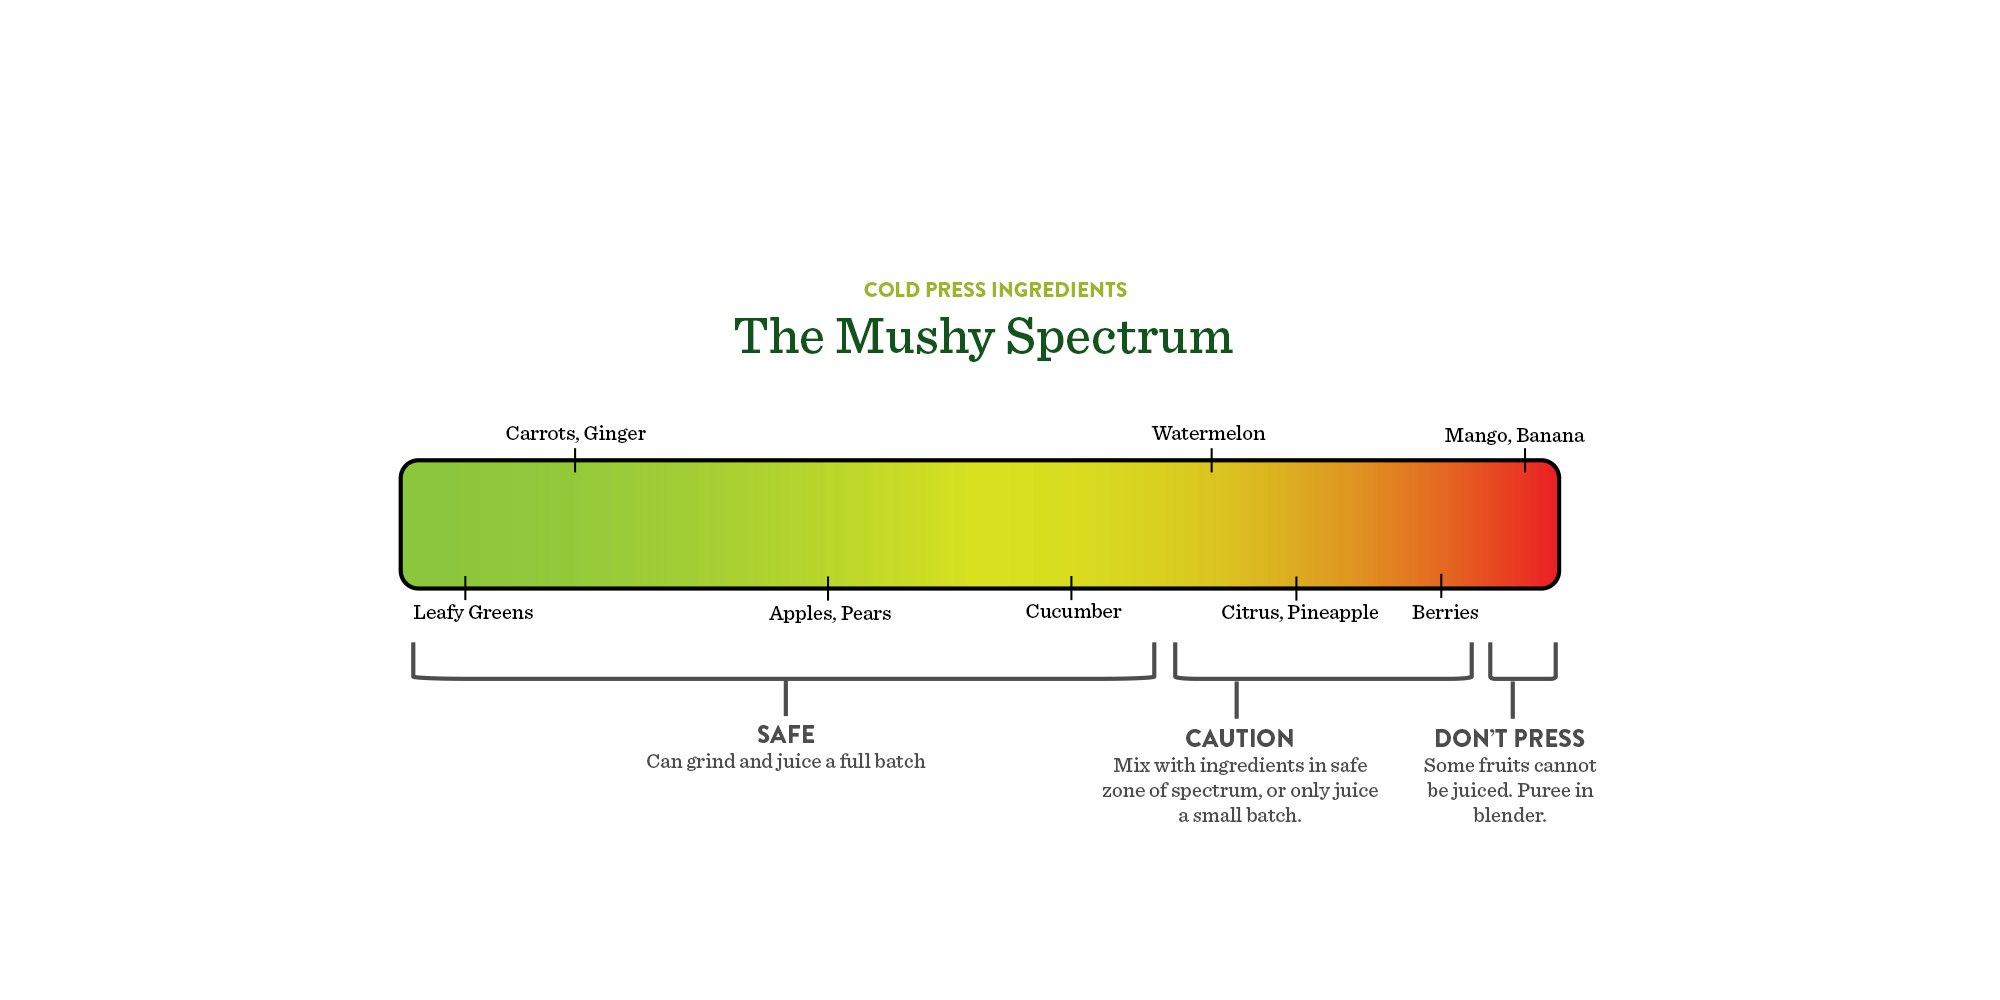 The mushy spectrum